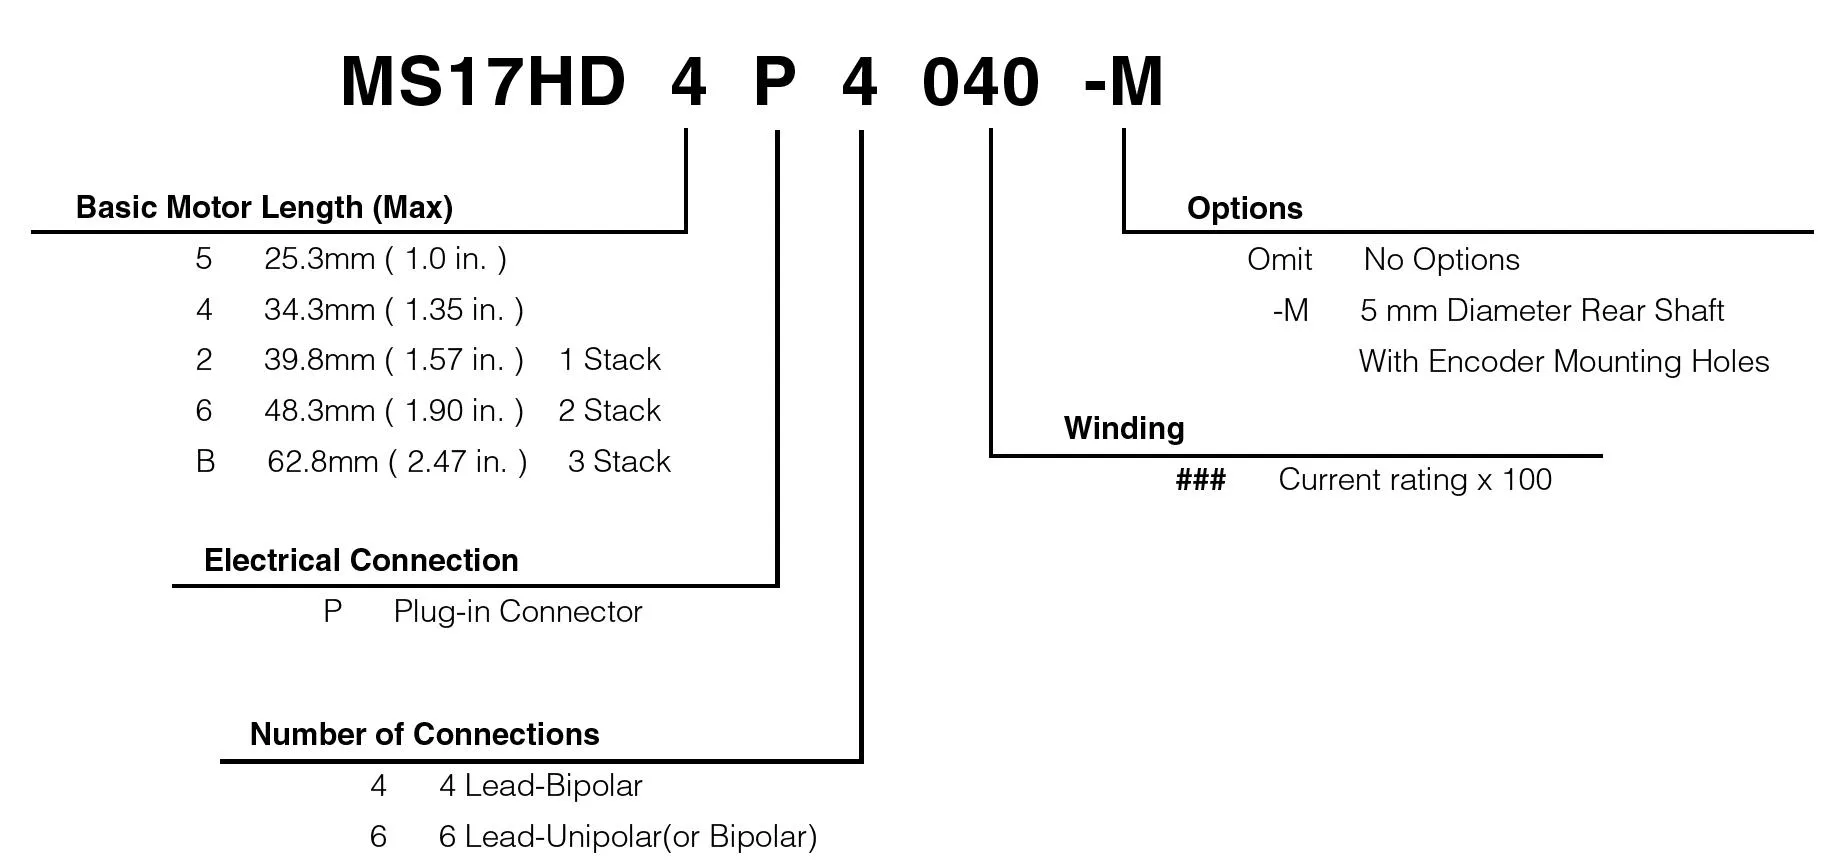 Model Numbering System